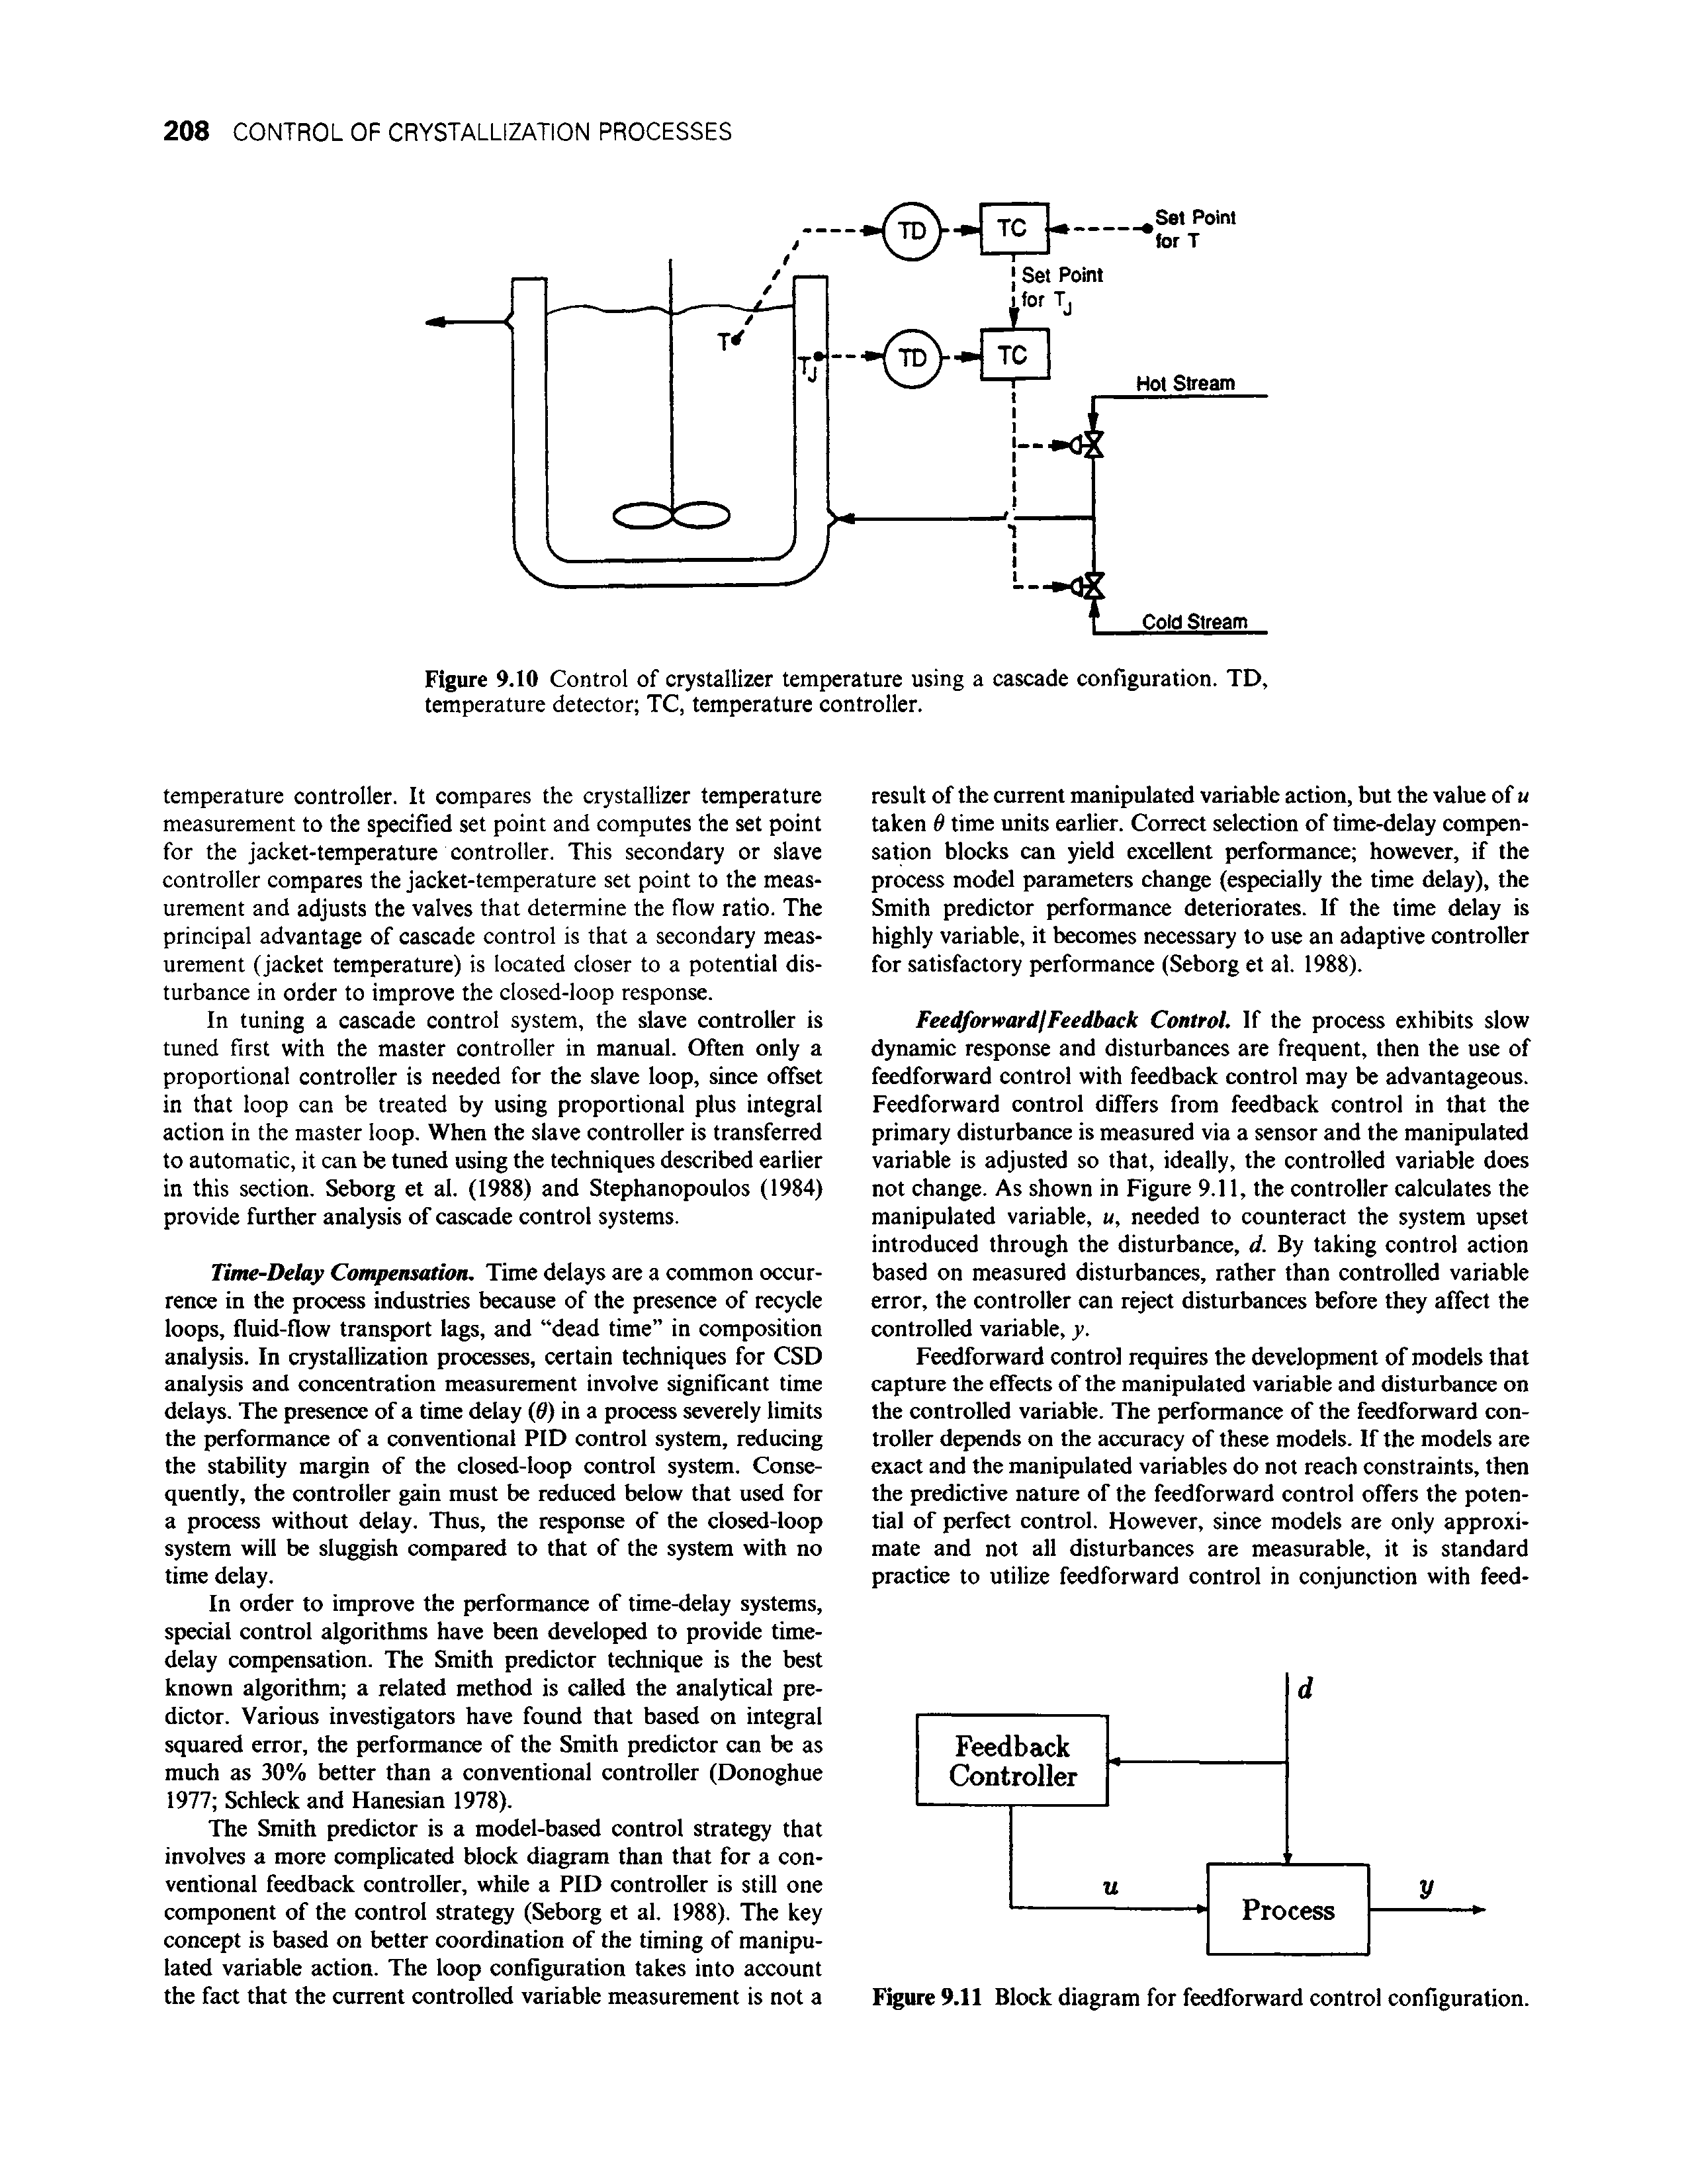 Figure 9.10 Control of crystallizer temperature using a cascade configuration. TD, temperature detector TC, temperature controller.